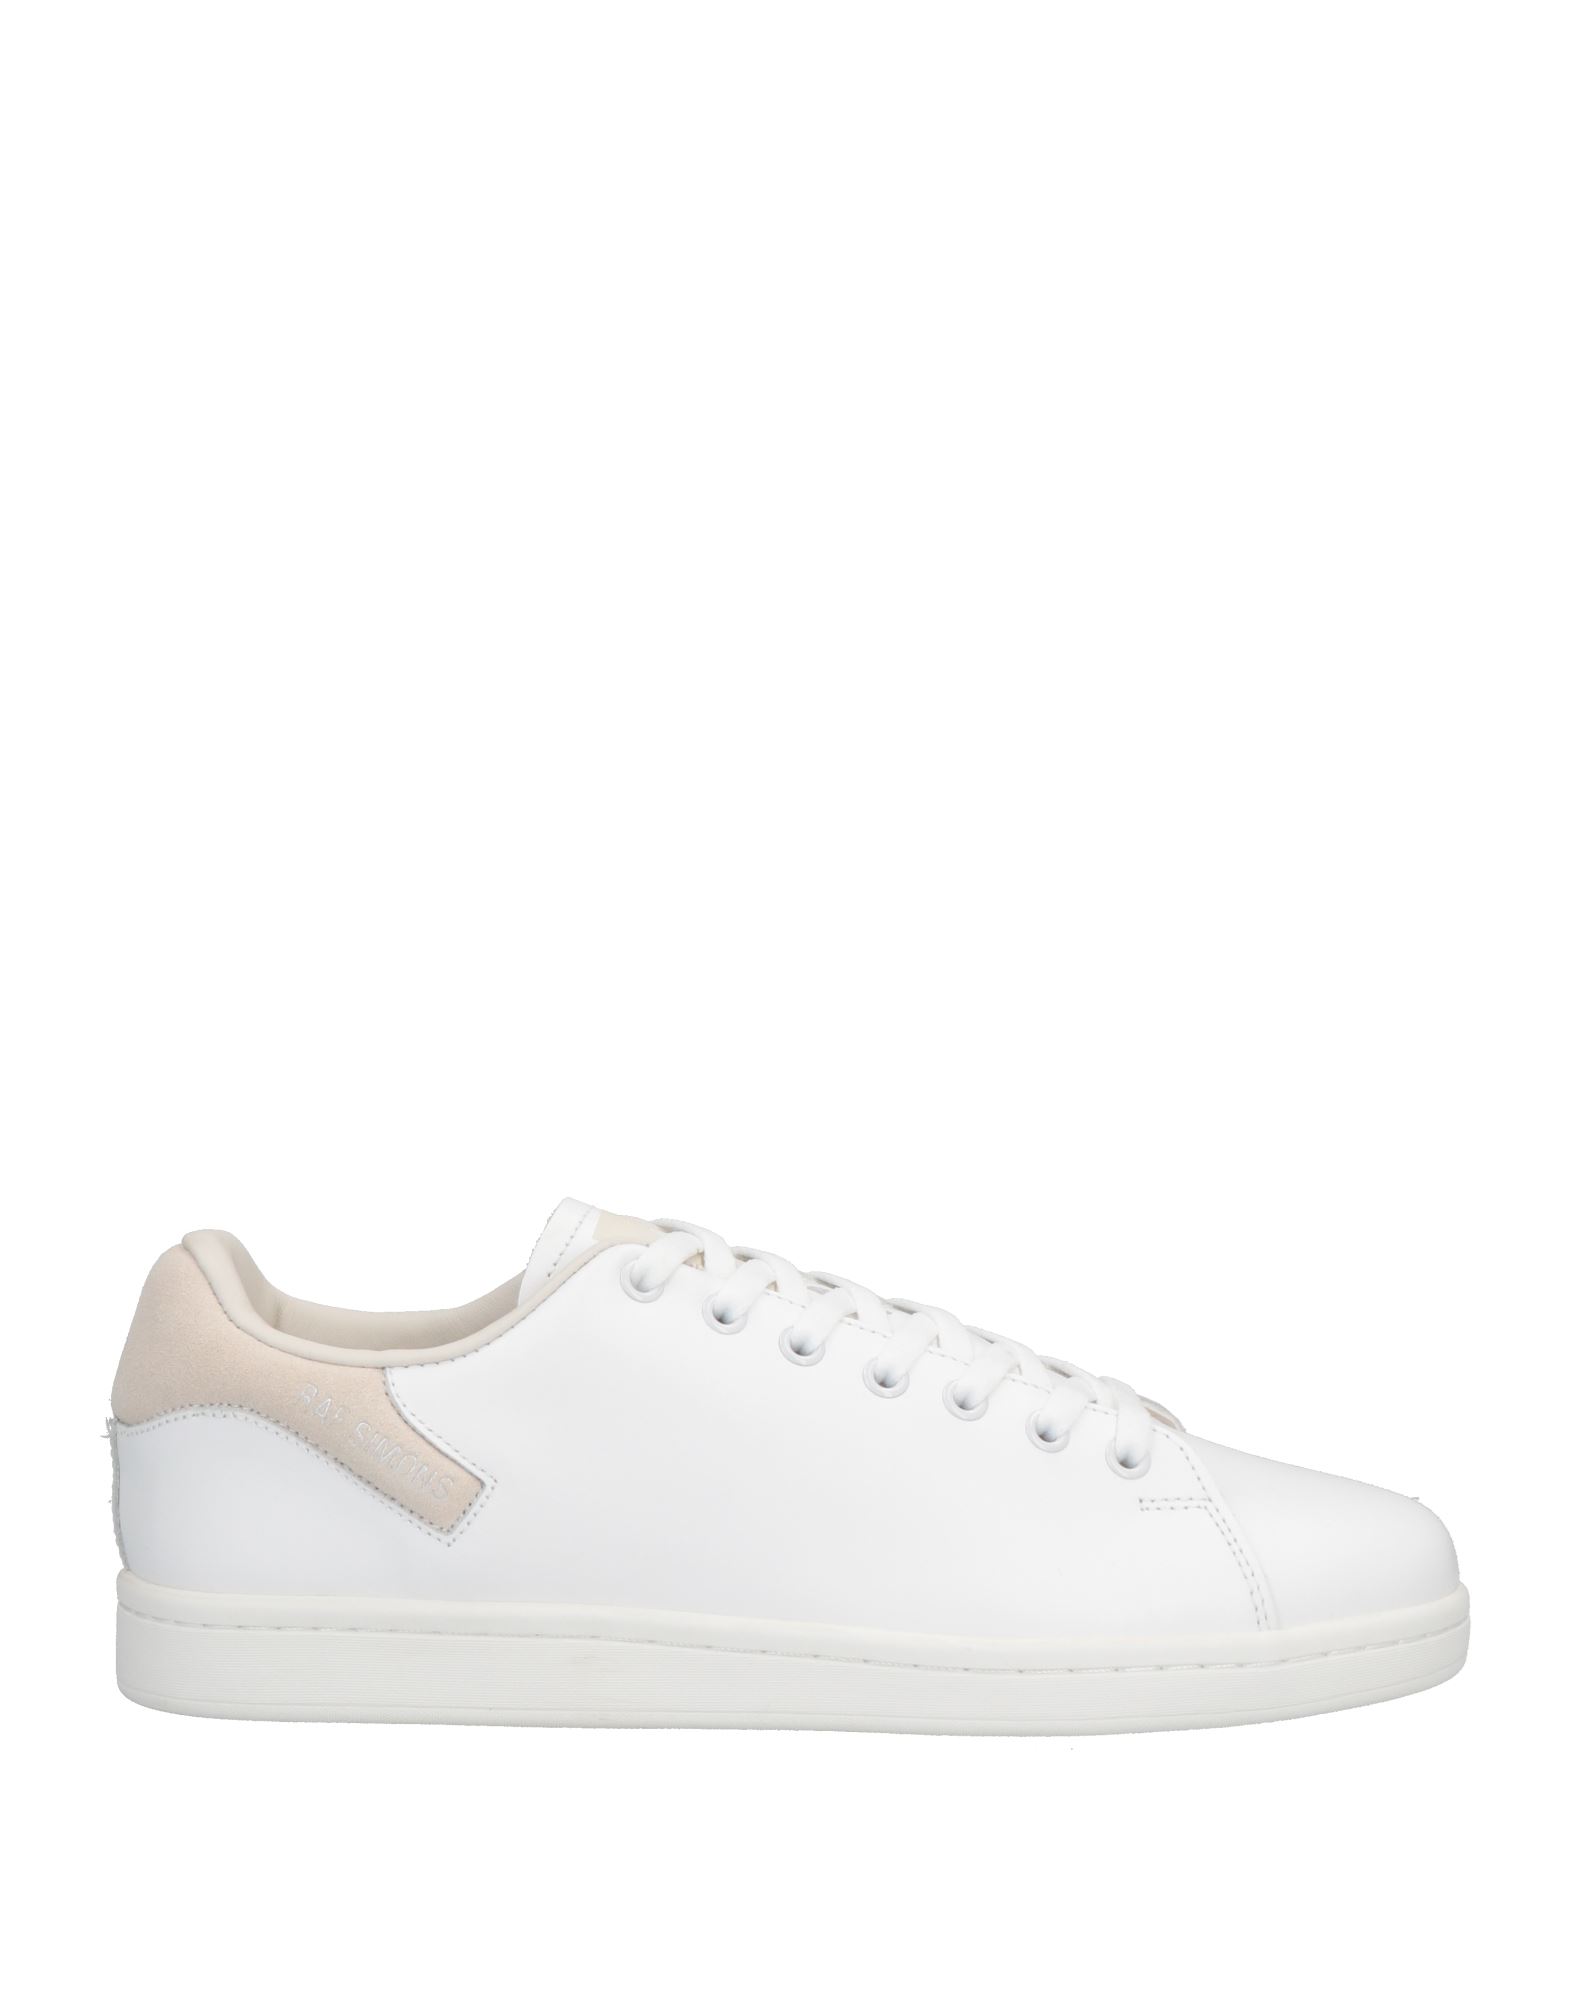 Raf Simons Sneakers In White